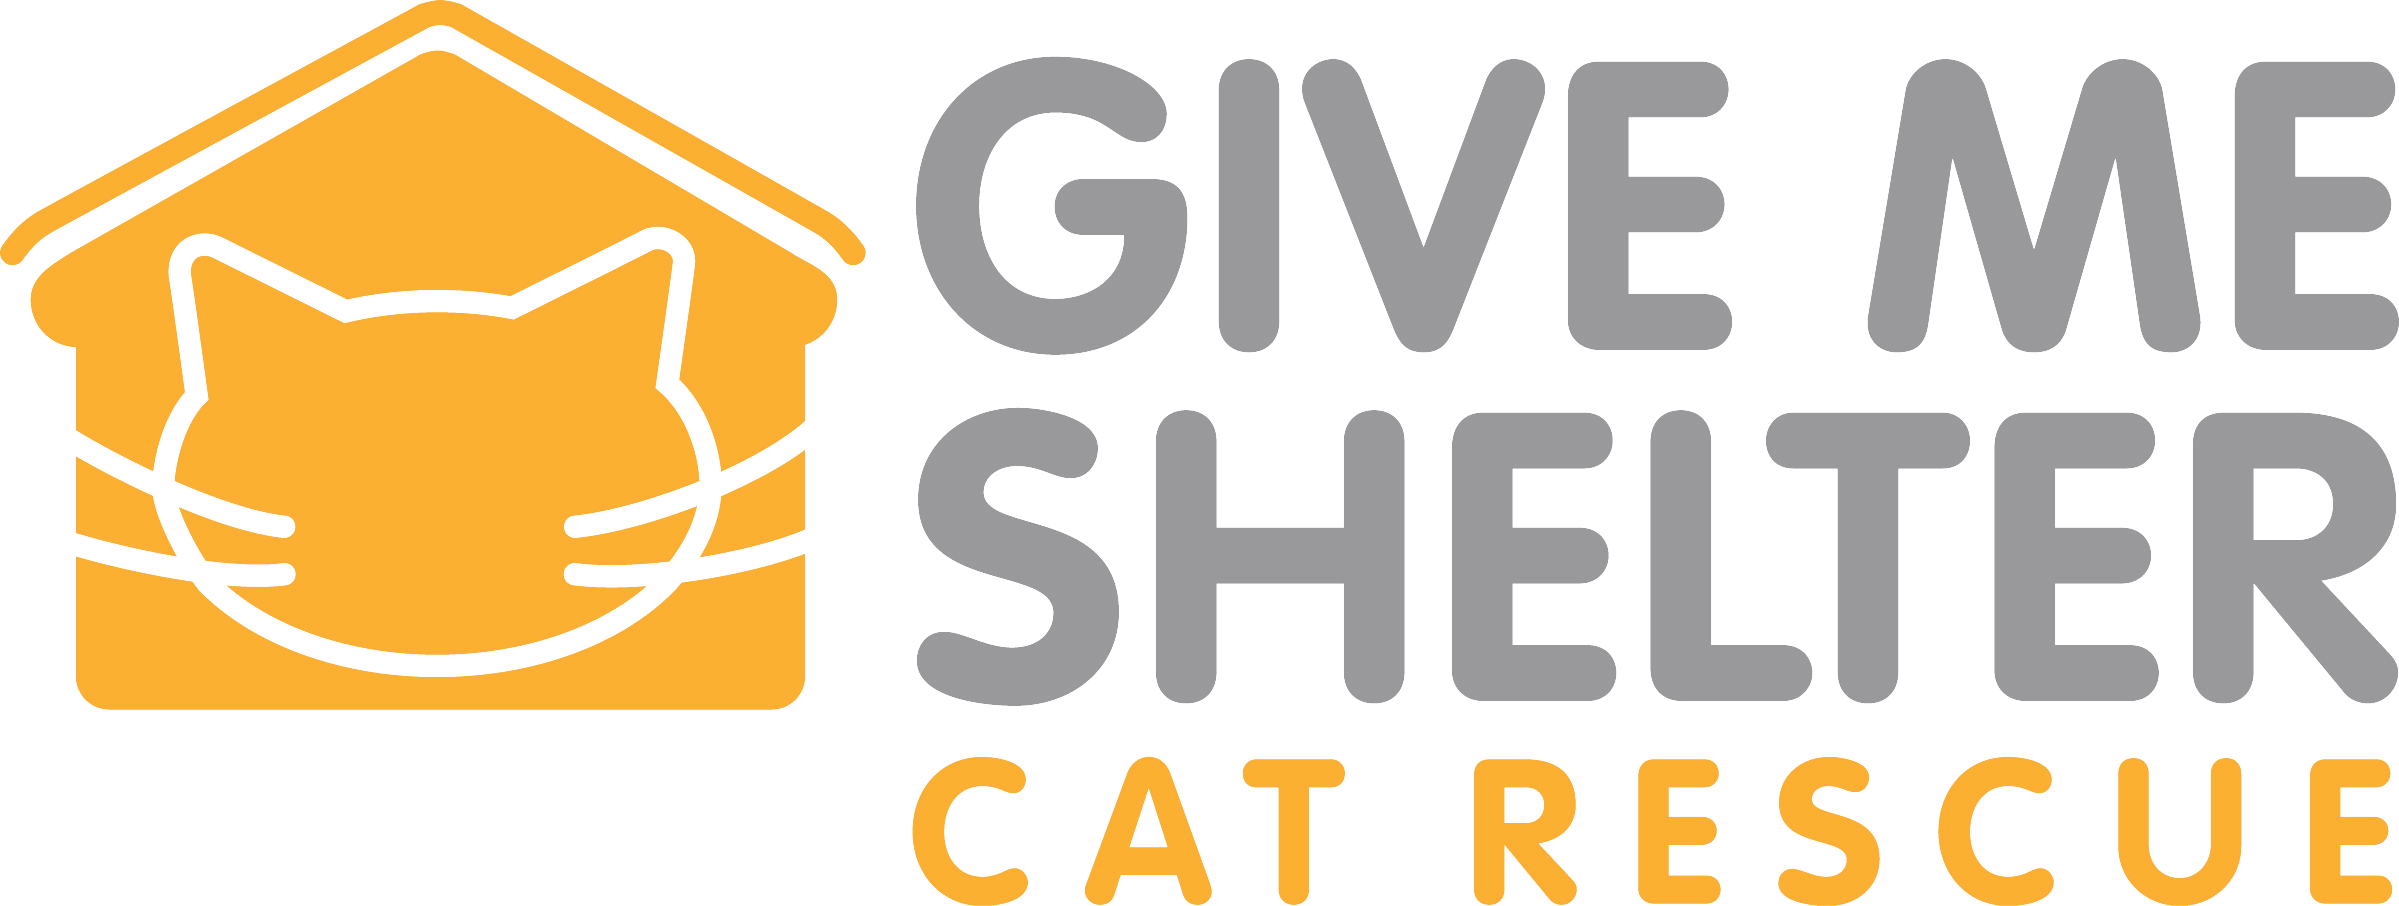 Give Me Shelter logo